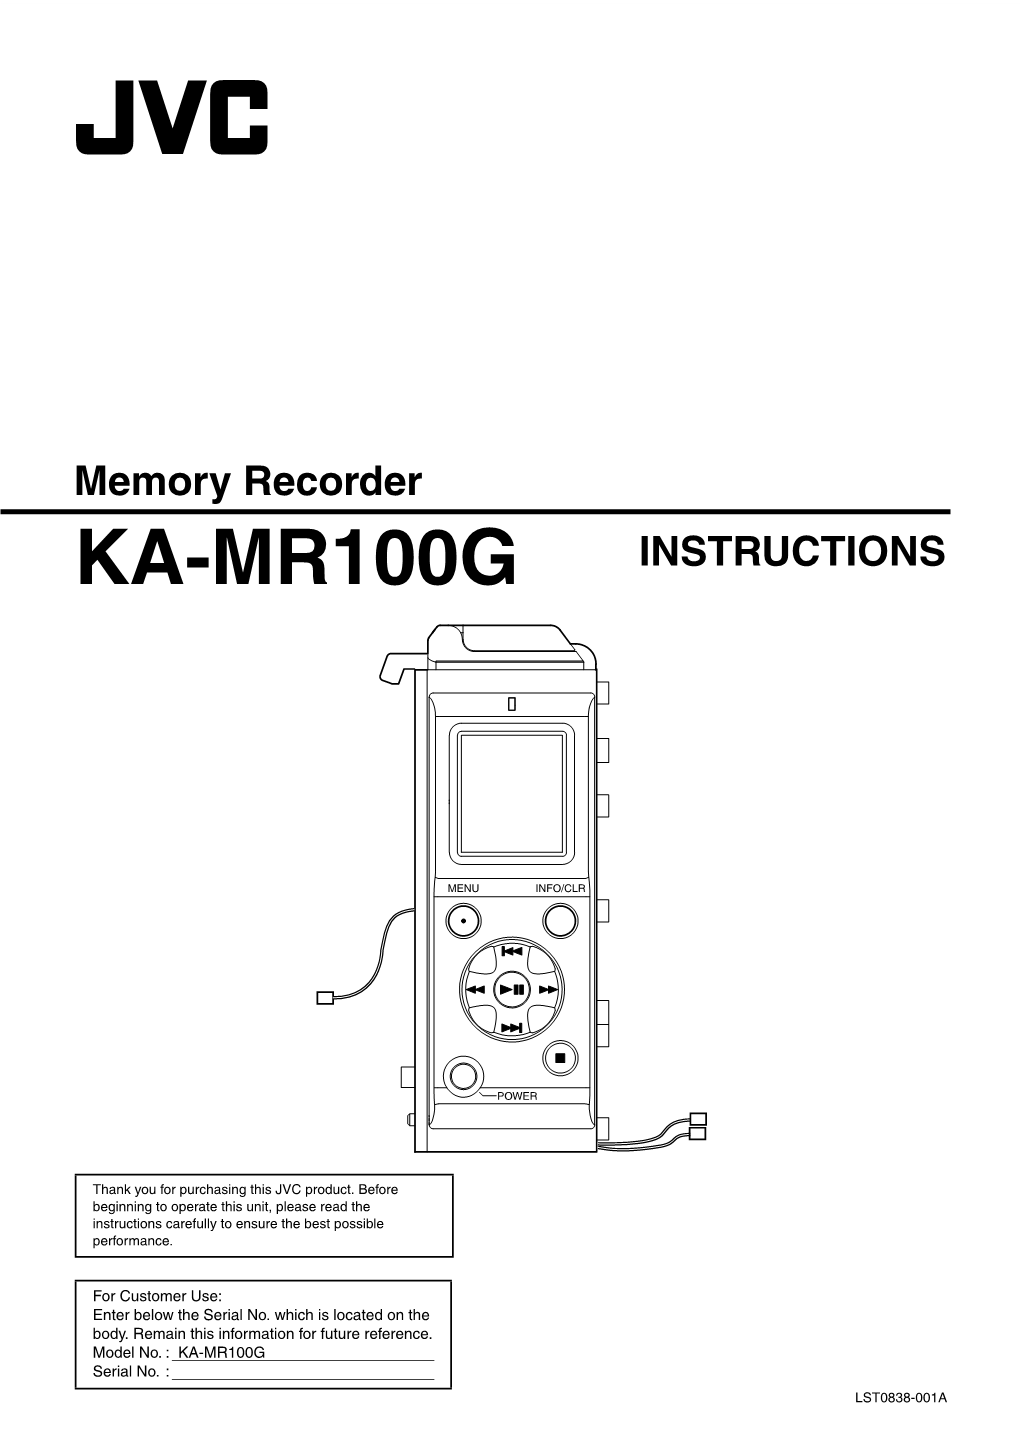 KA-MR100G EN.Book Page 1 Thursday, February 5, 2009 5:28 PM